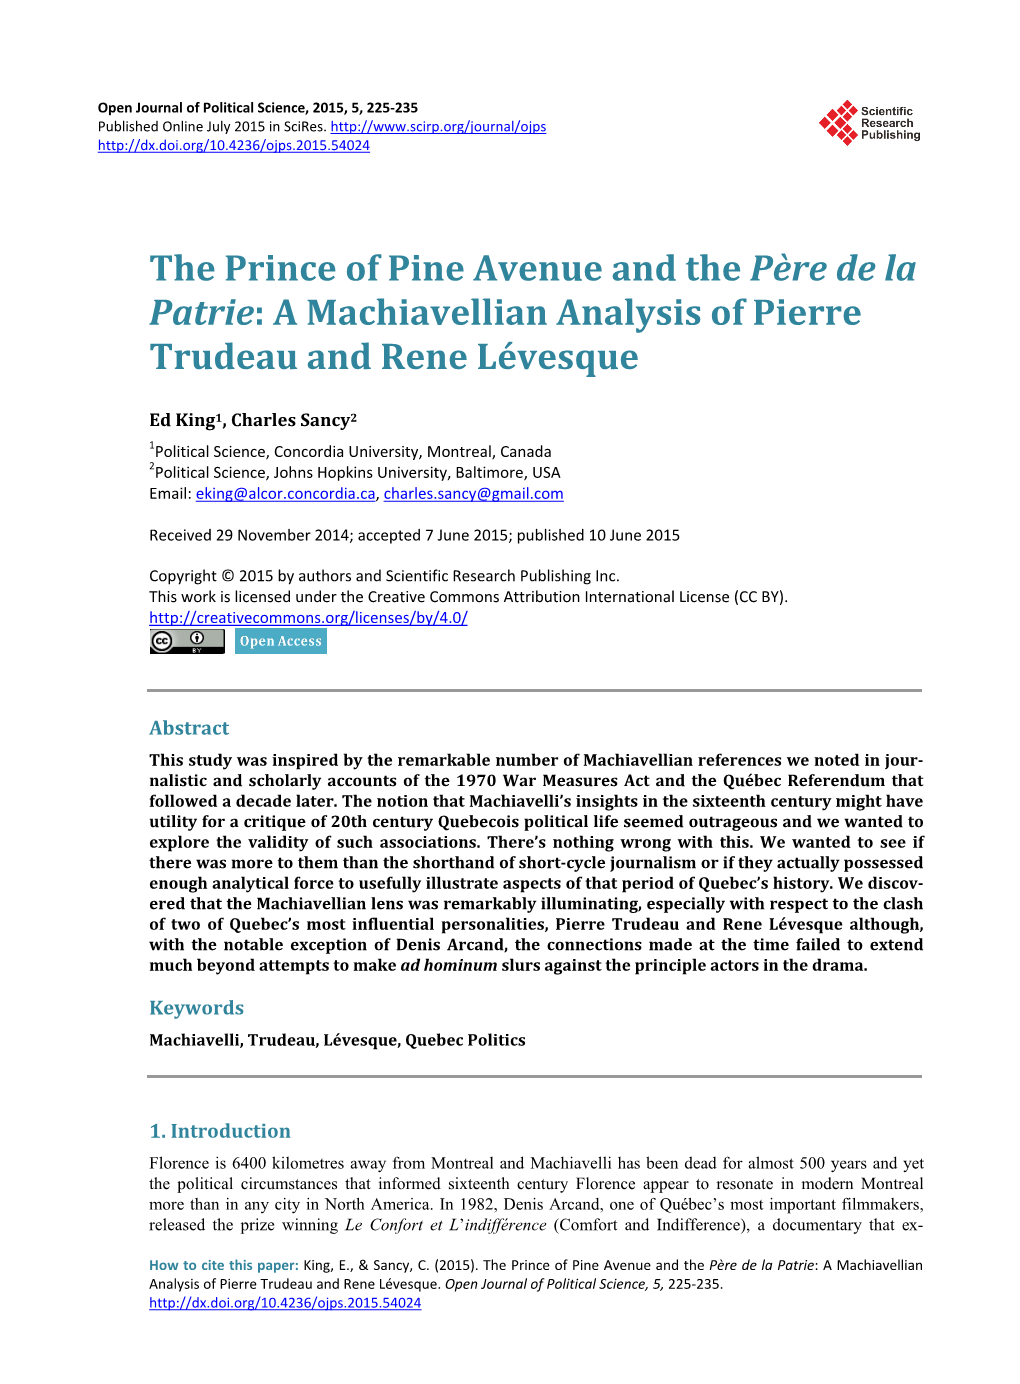 A Machiavellian Analysis of Pierre Trudeau and Rene Lévesque